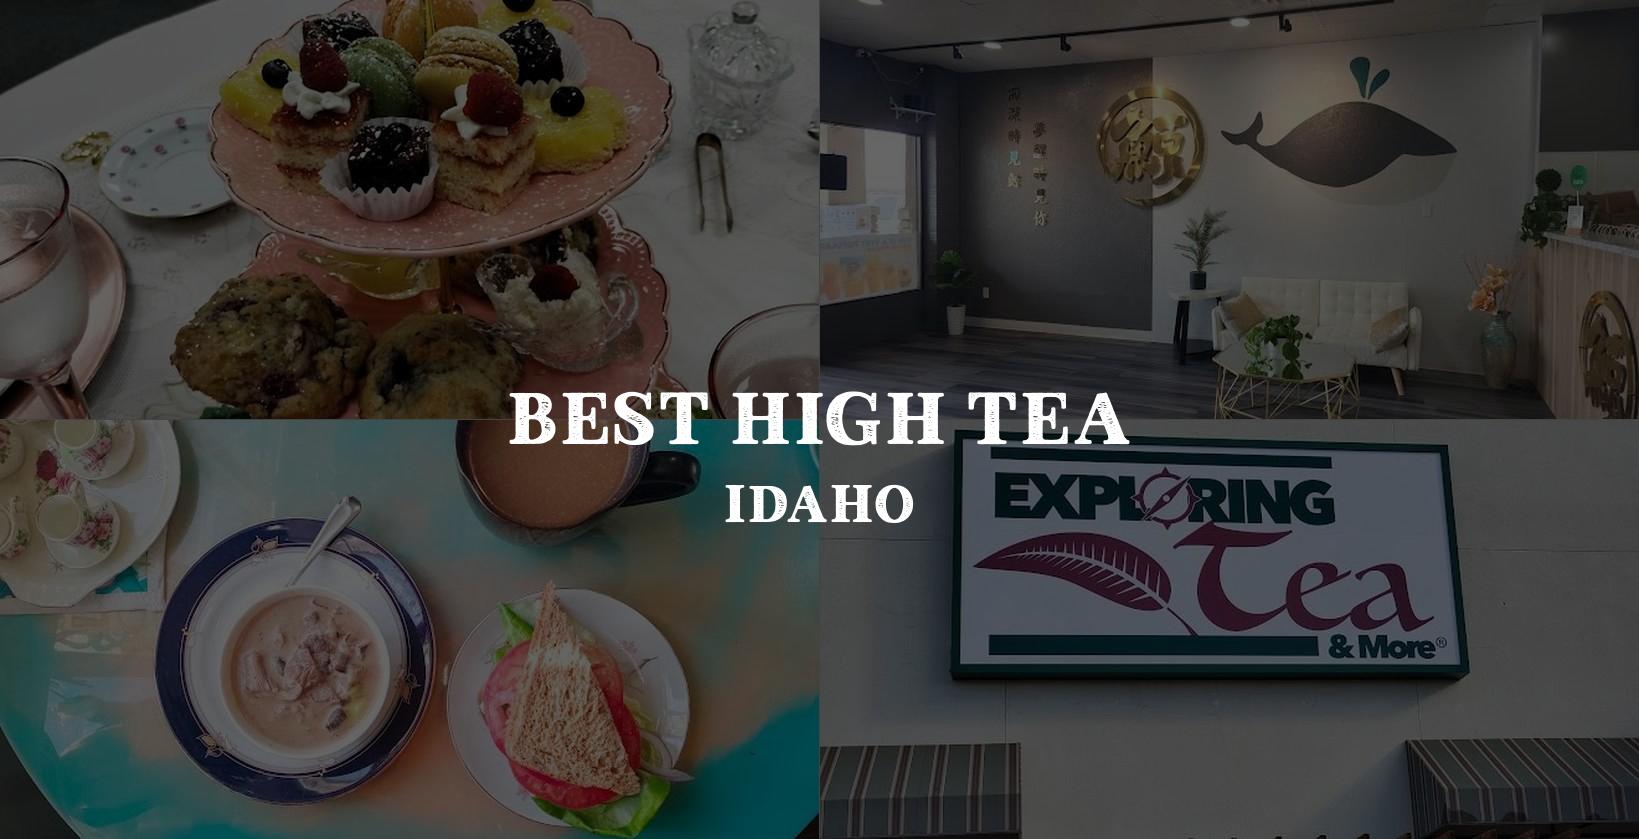 Choosing the right High Tea spot in Idaho